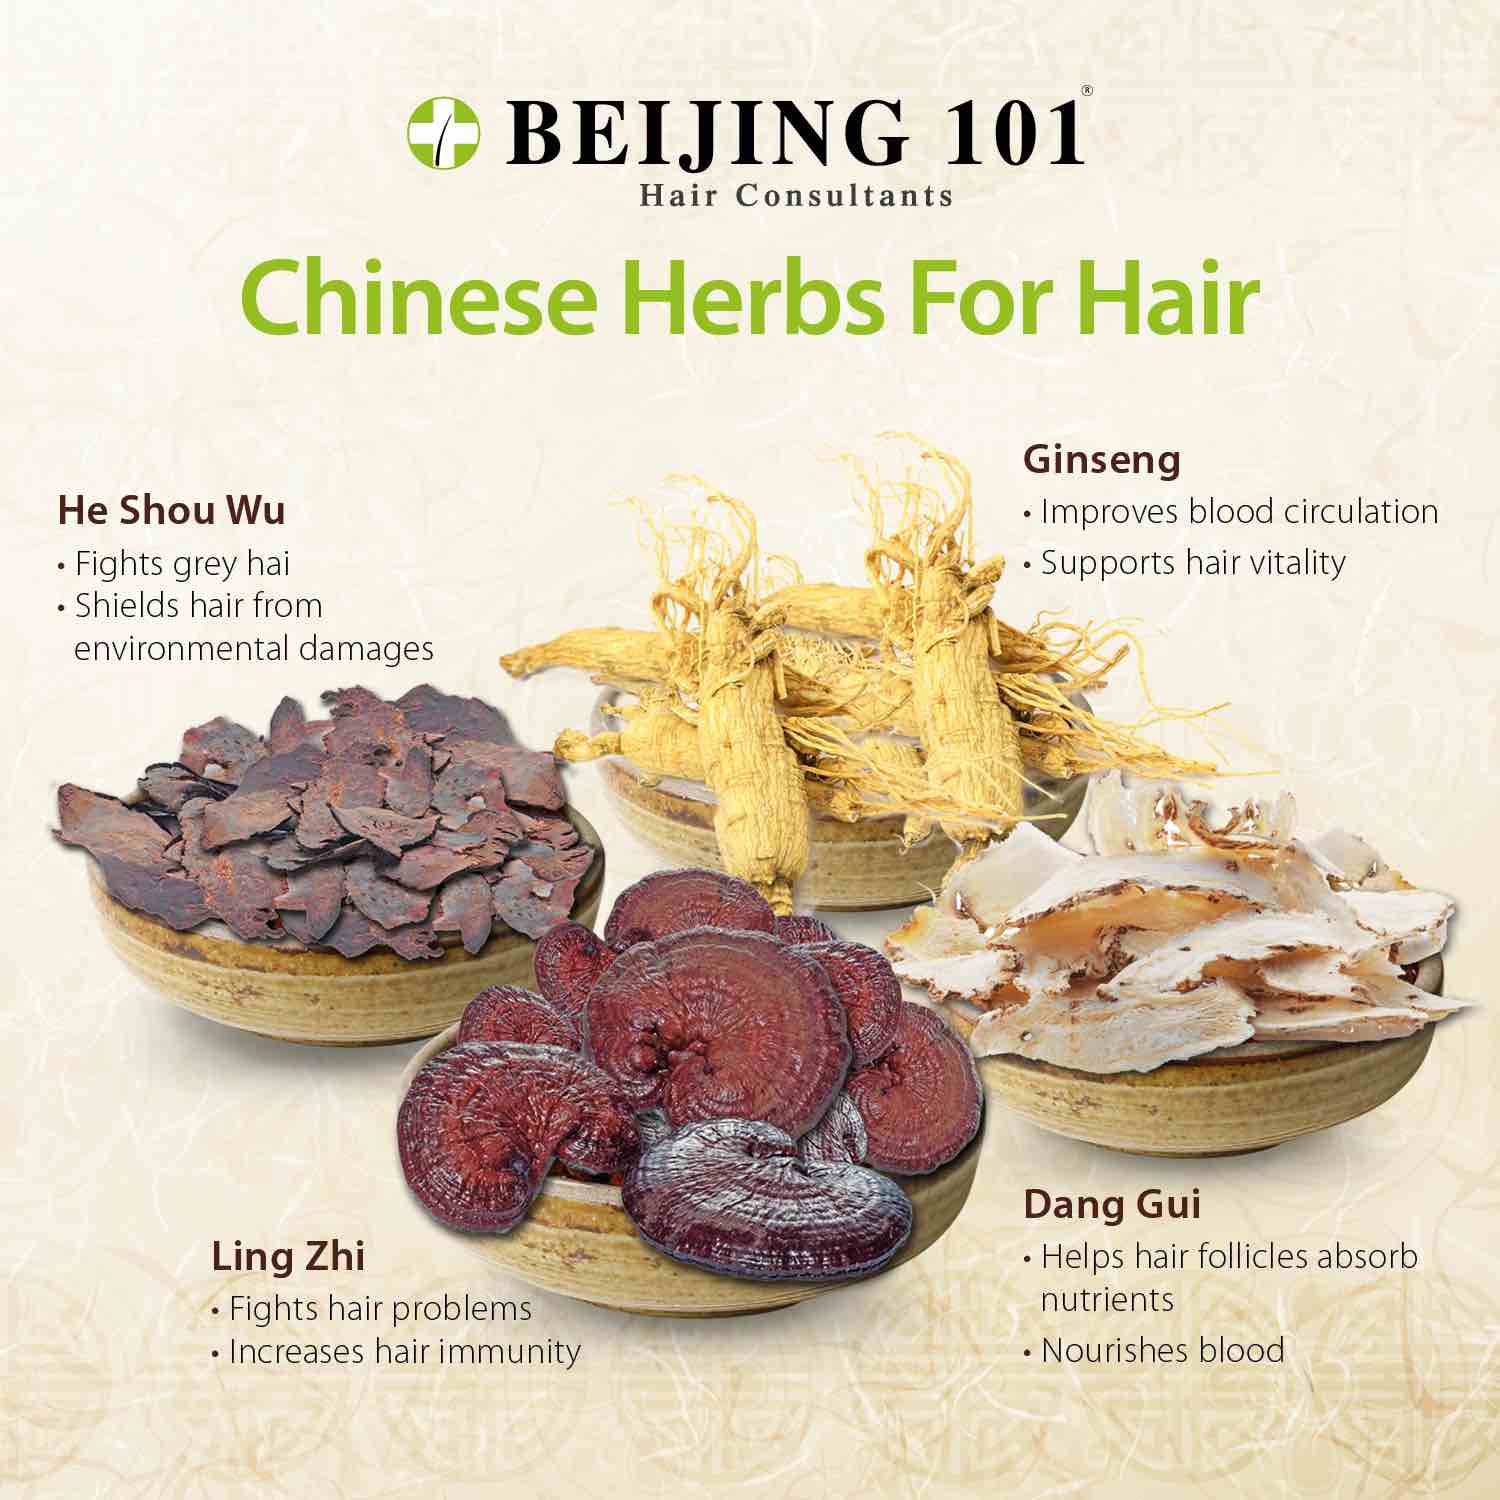 beijing-101-use-of-chinese-herbs-to-curb-hair-loss-aspirantsg